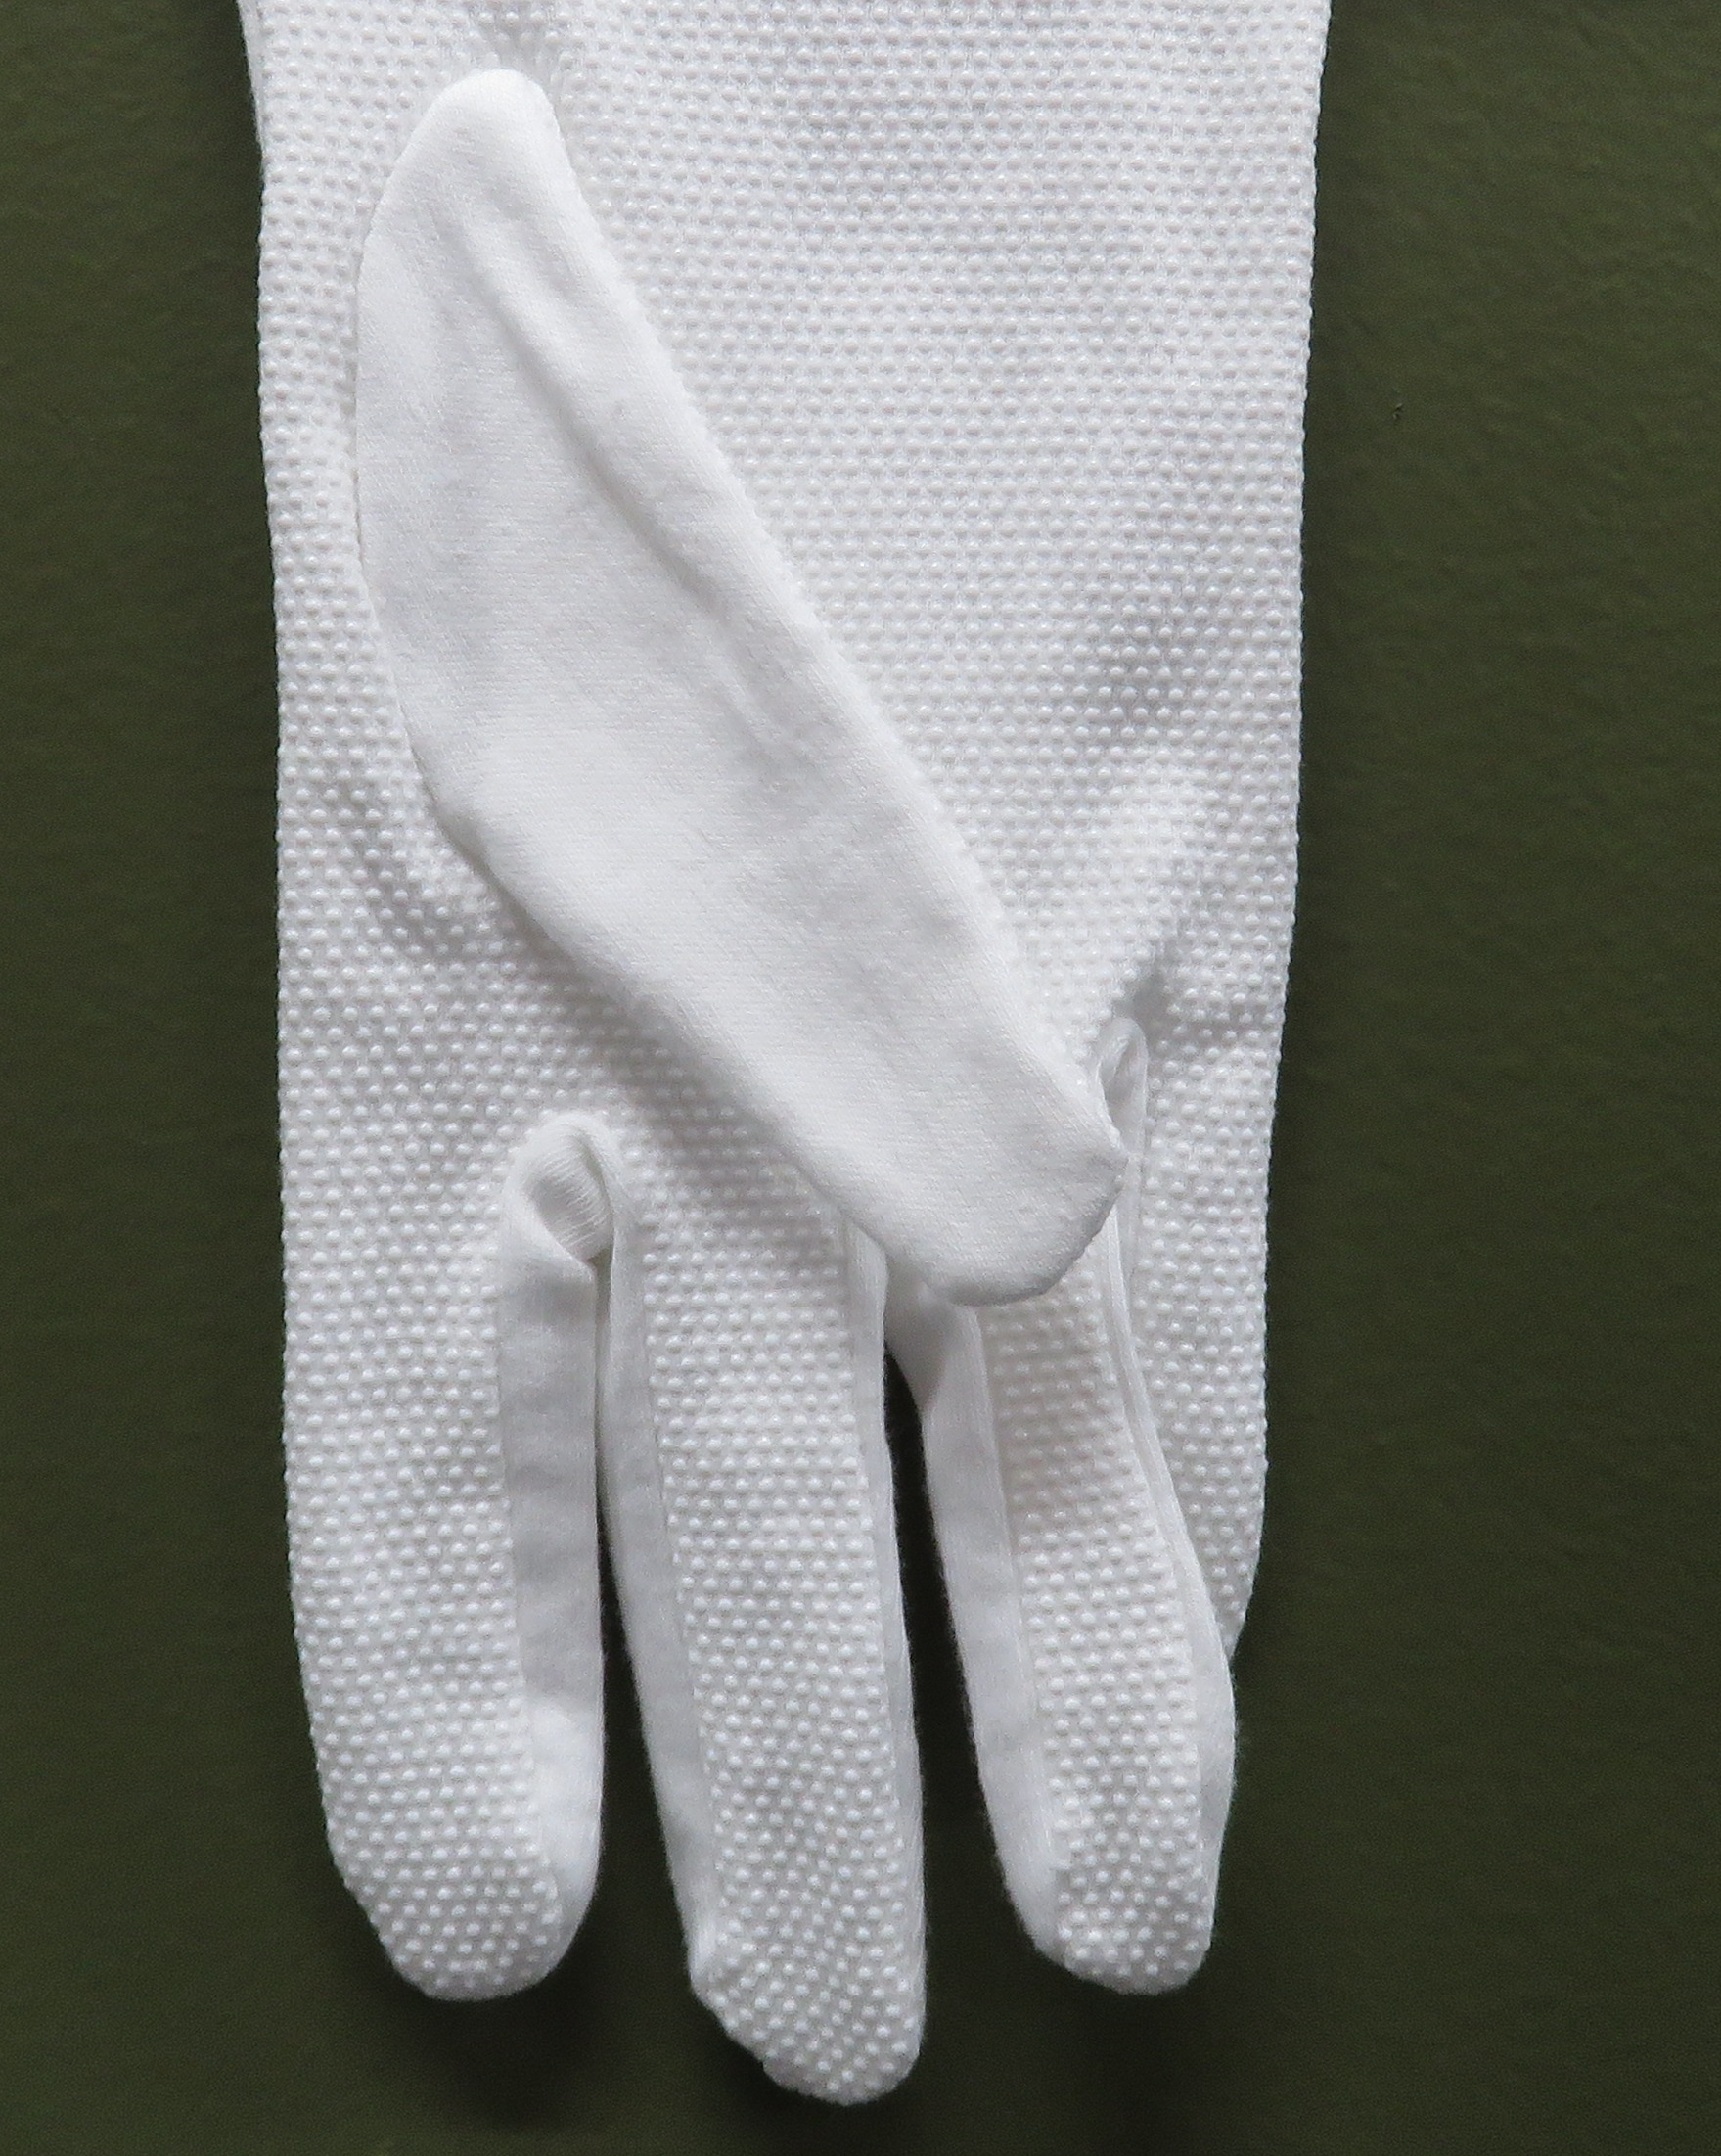 White Cotton Beaded Grip Gloves